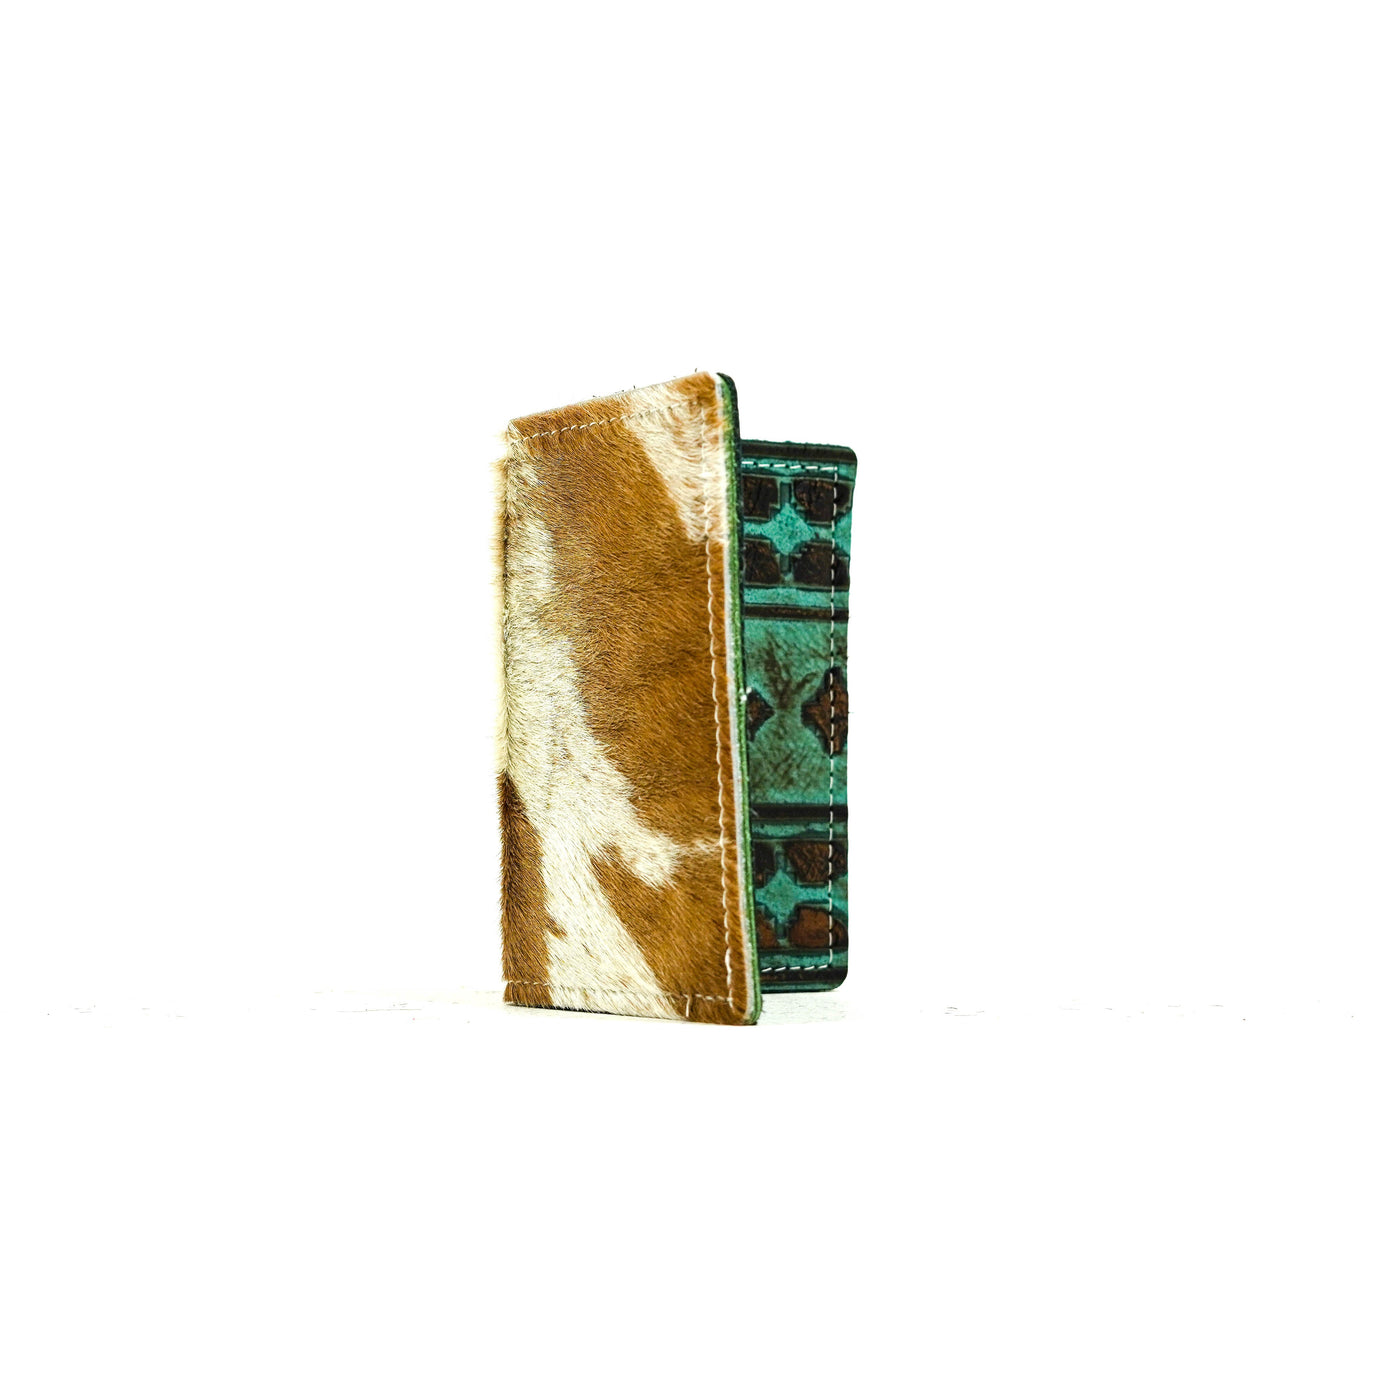 Waylon Wallet - Light Brindle w/ Turquoise Navajo-Waylon Wallet-Western-Cowhide-Bags-Handmade-Products-Gifts-Dancing Cactus Designs